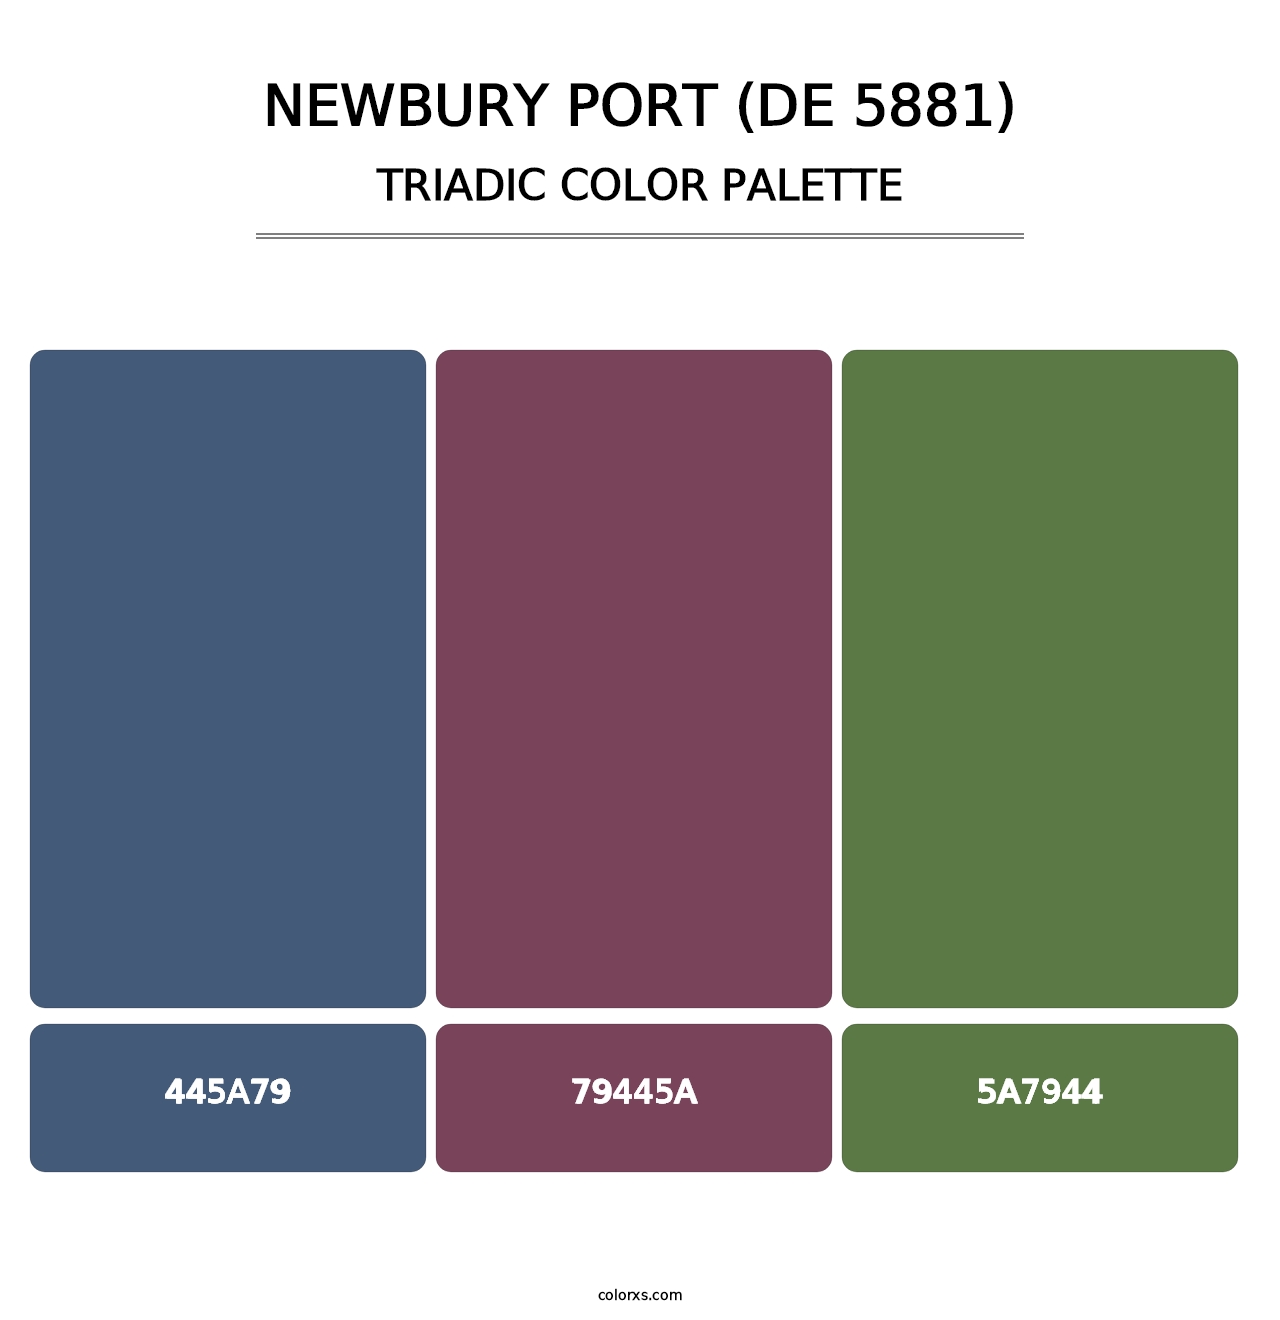 Newbury Port (DE 5881) - Triadic Color Palette